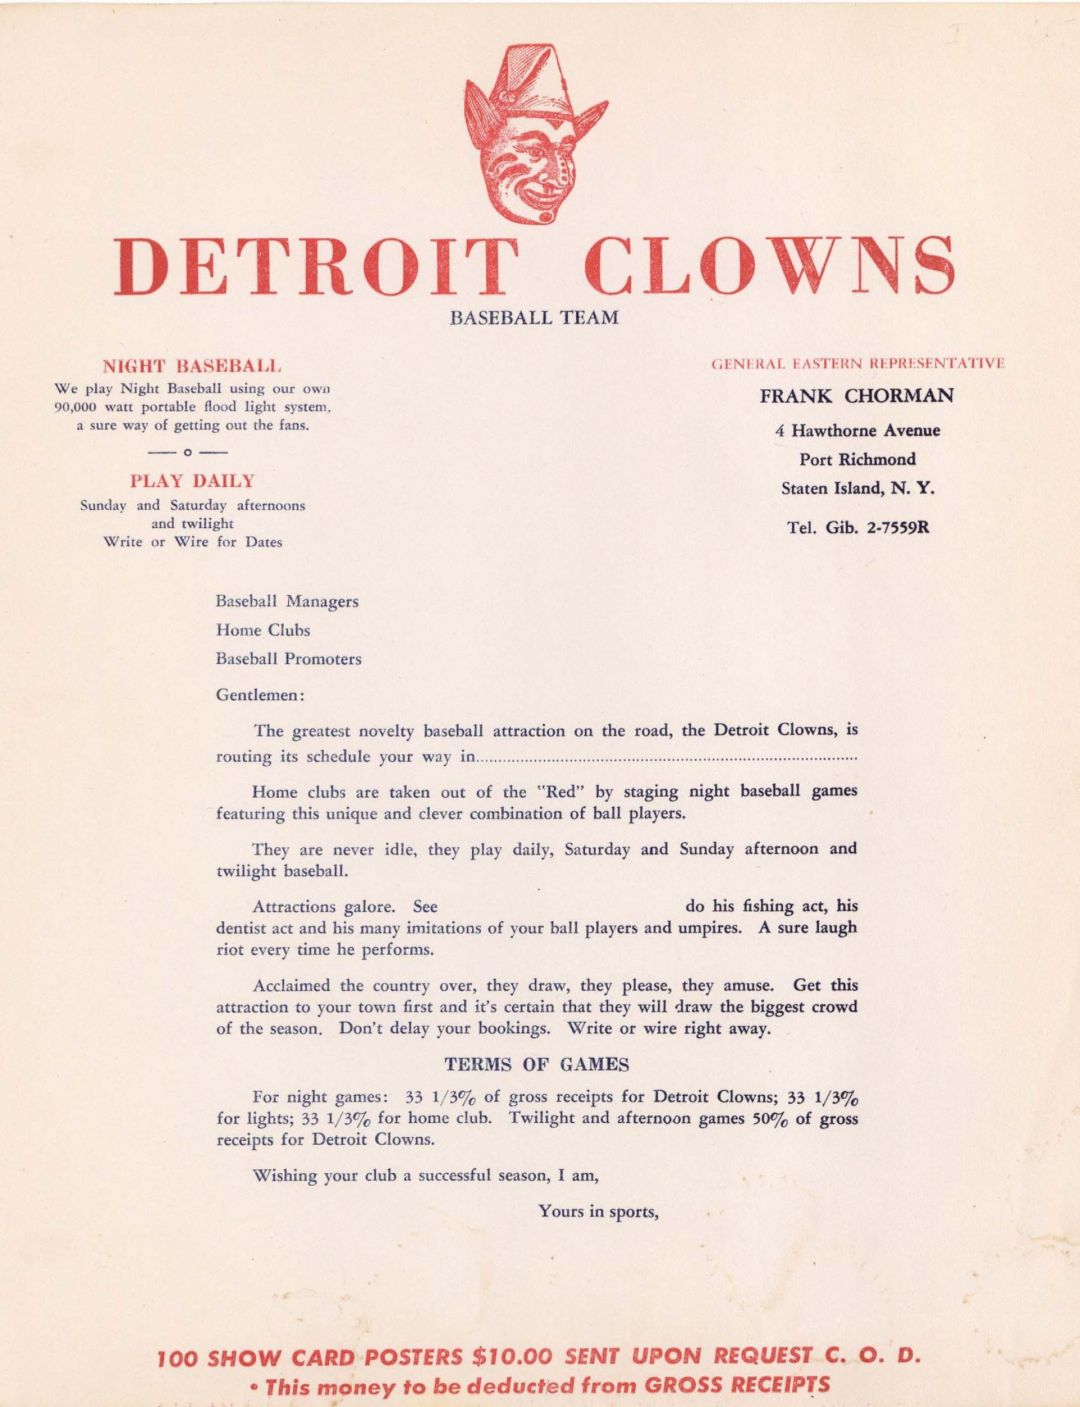 Detroit Clowns Baseball Team - Black Baseball Team - Sports Memorabilia